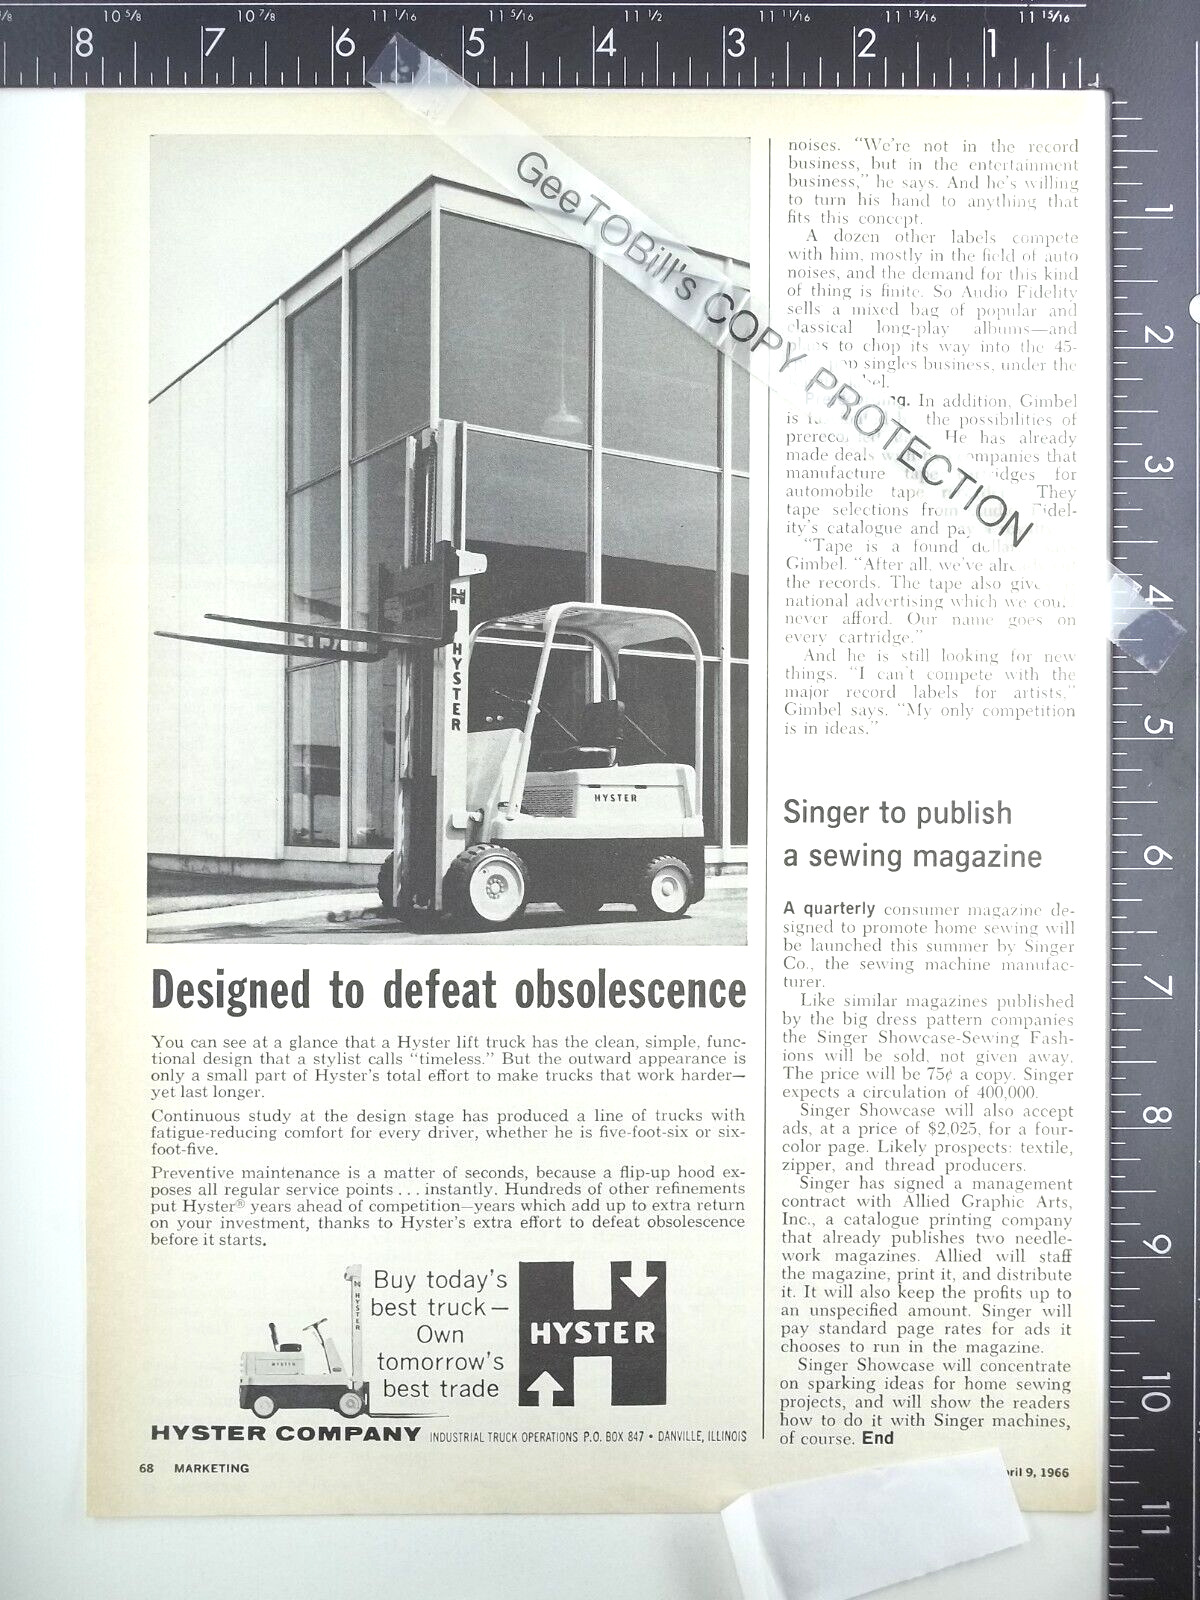 1966 ADVERTISEMENT ADVERTISING for Hyster fork lift truck 1967 1965 1968